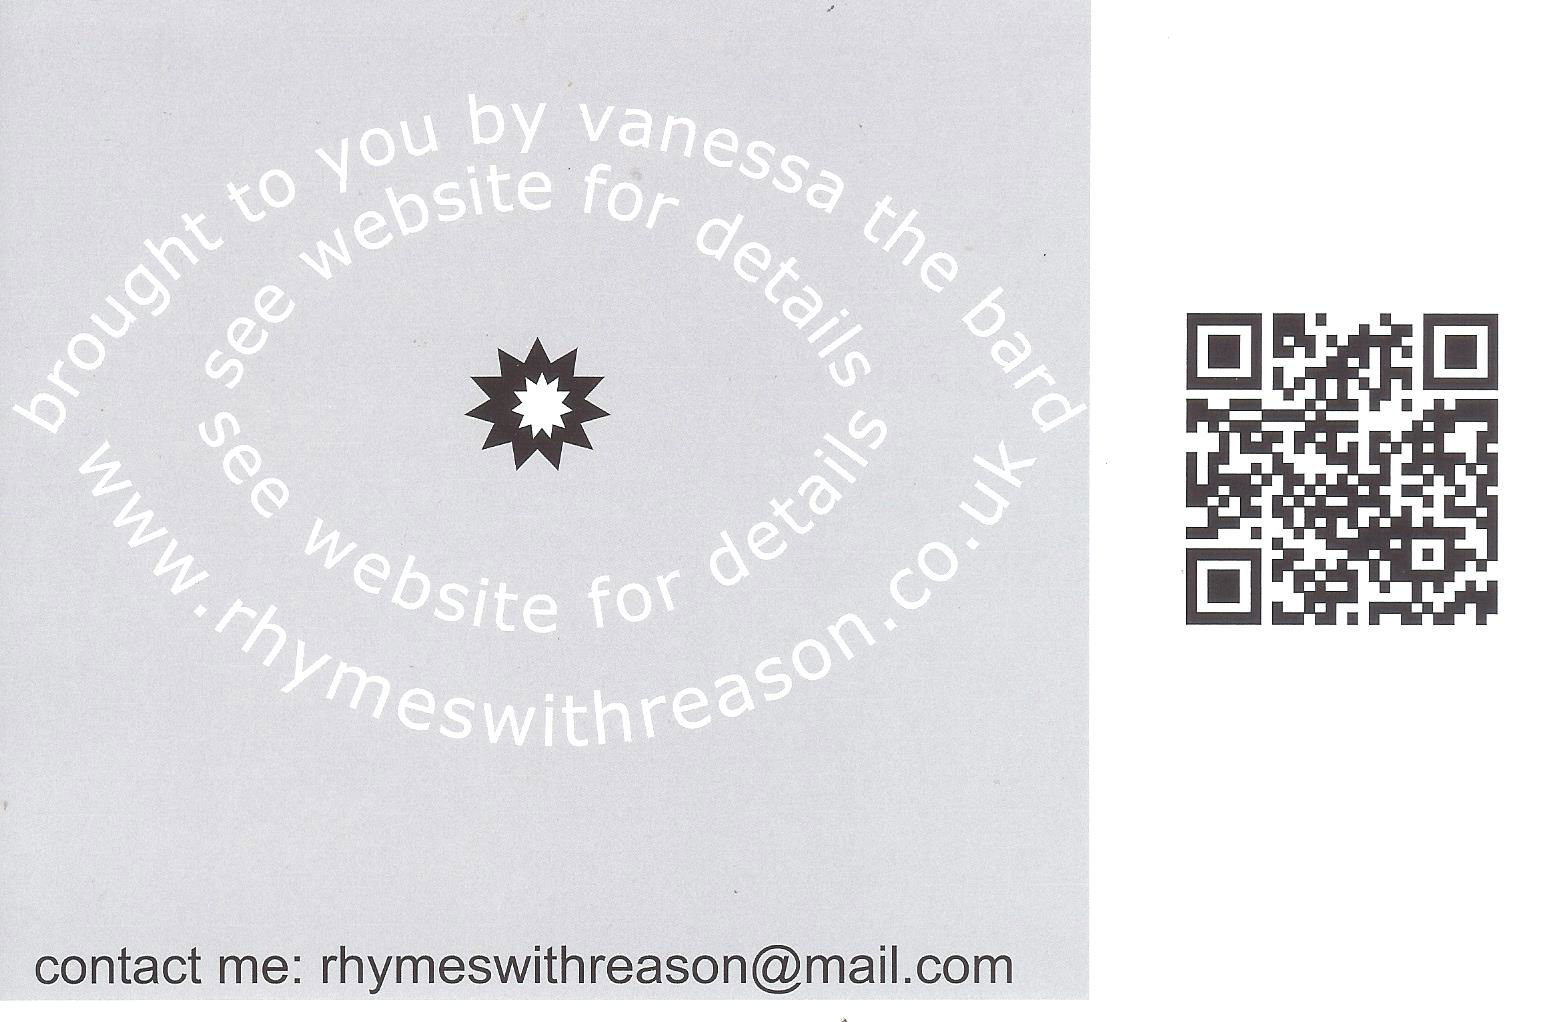 Vanessa's business card